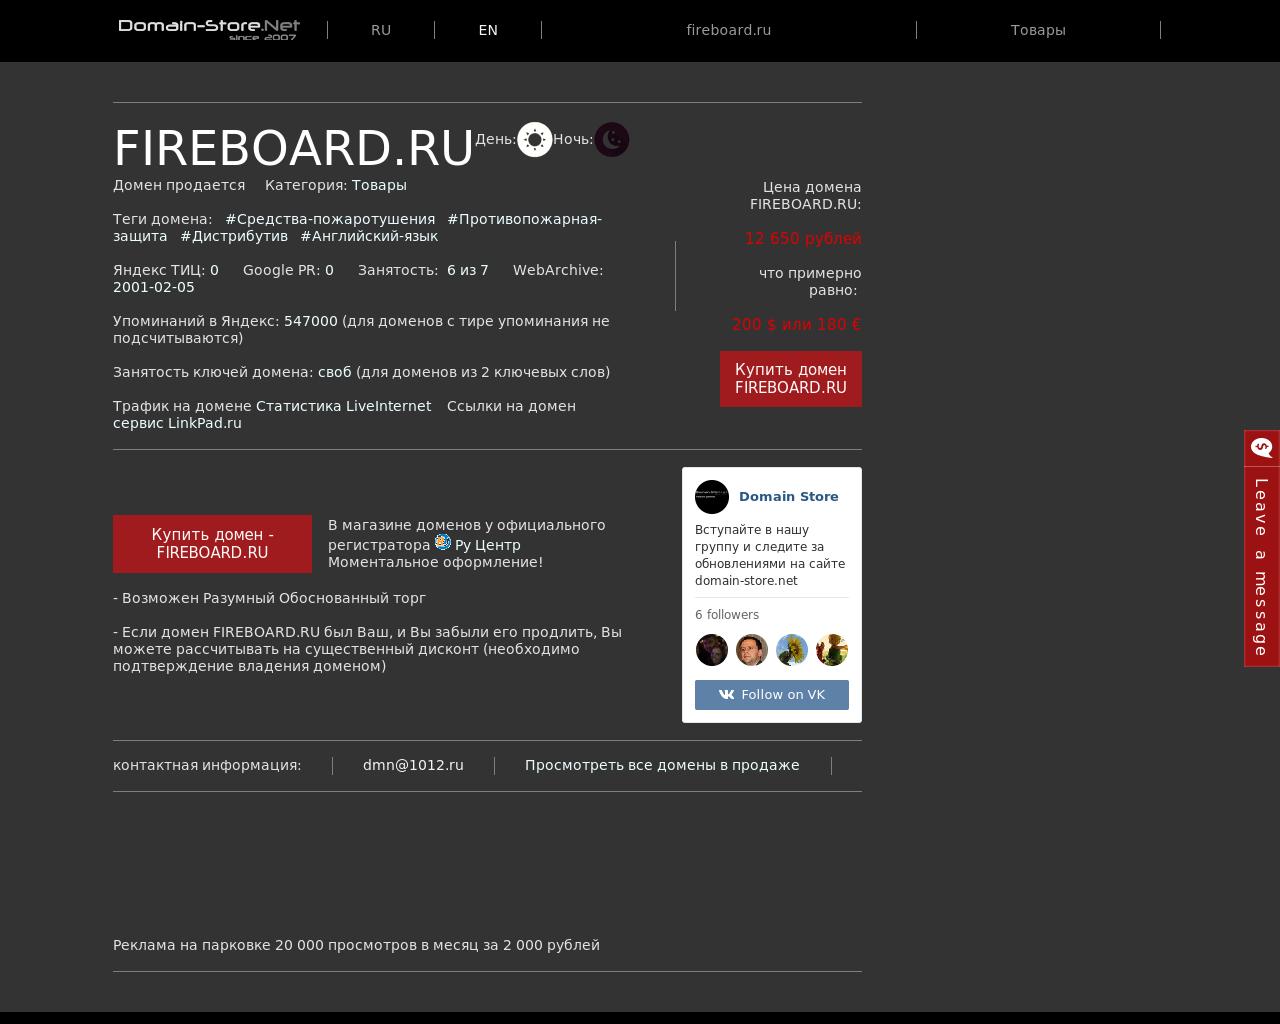 Изображение сайта fireboard.ru в разрешении 1280x1024